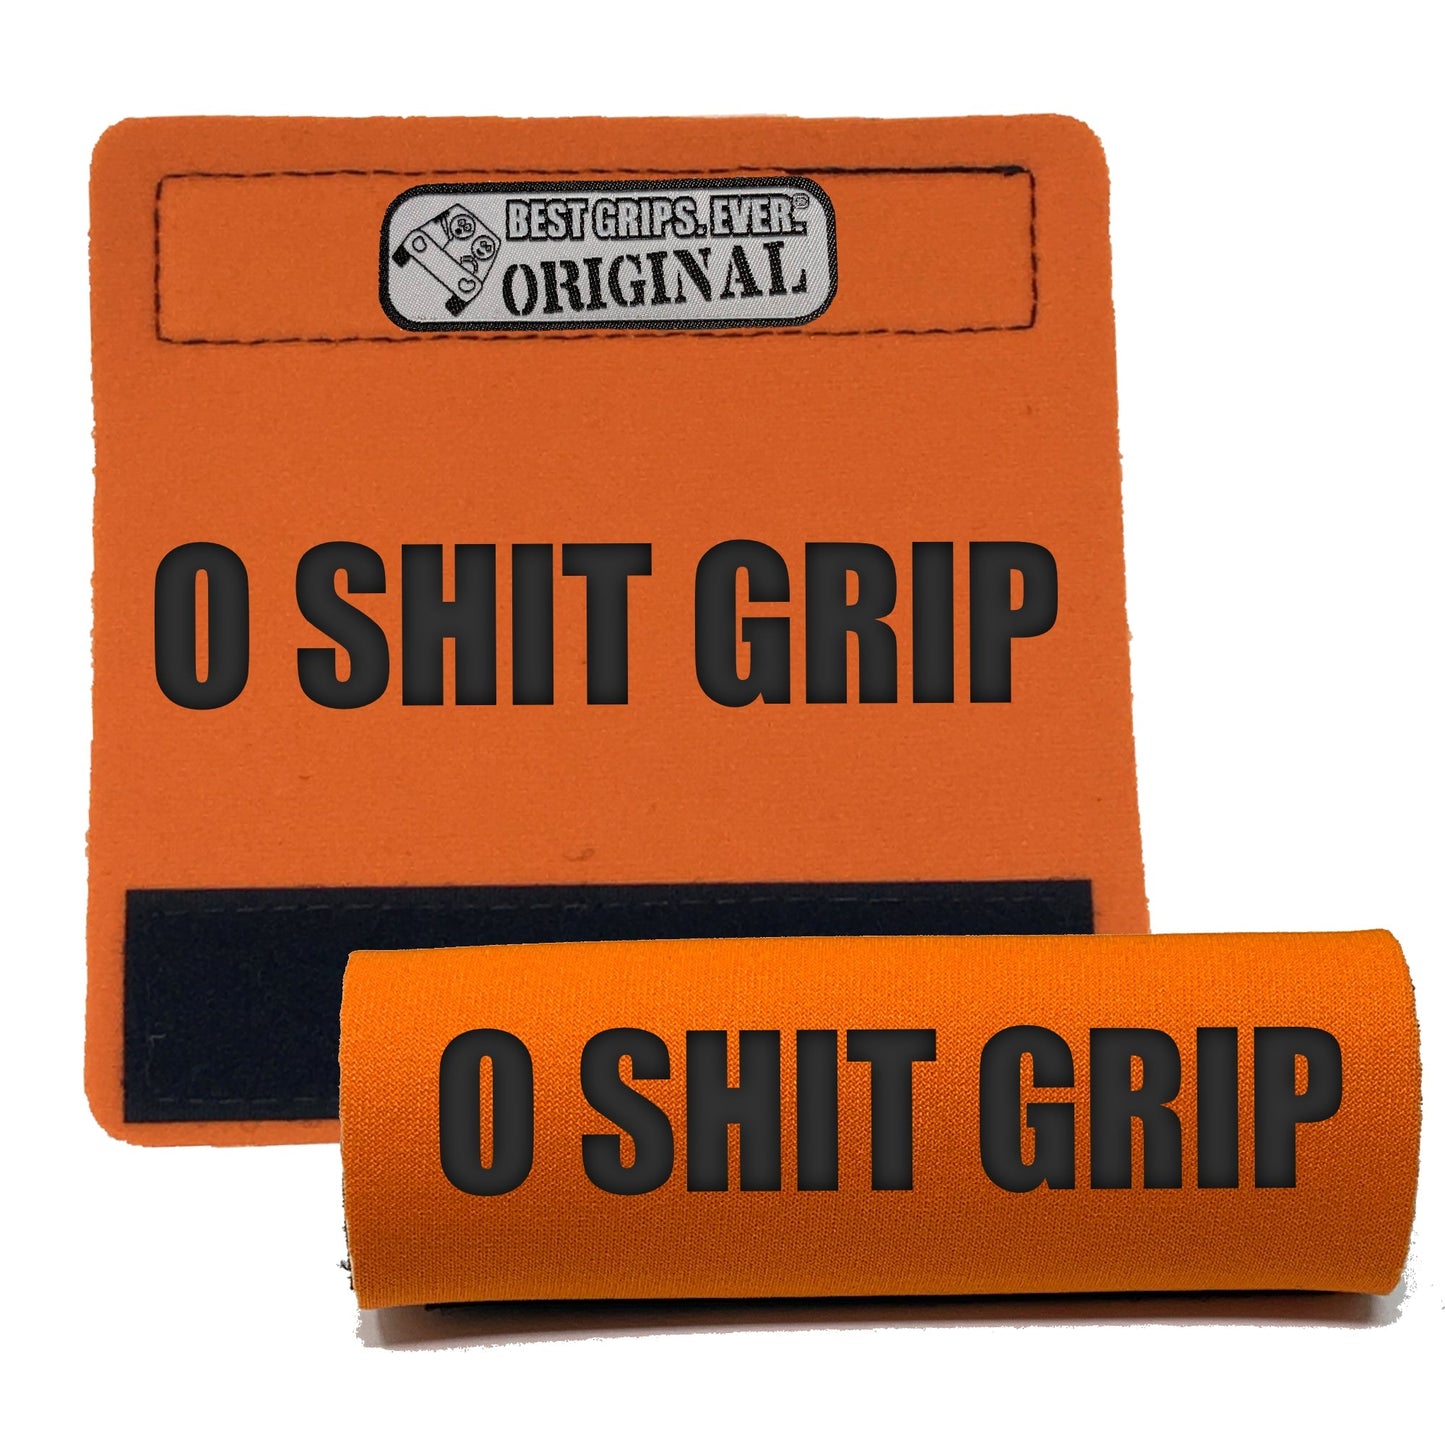 The O Shit Grip® (1 Unit)